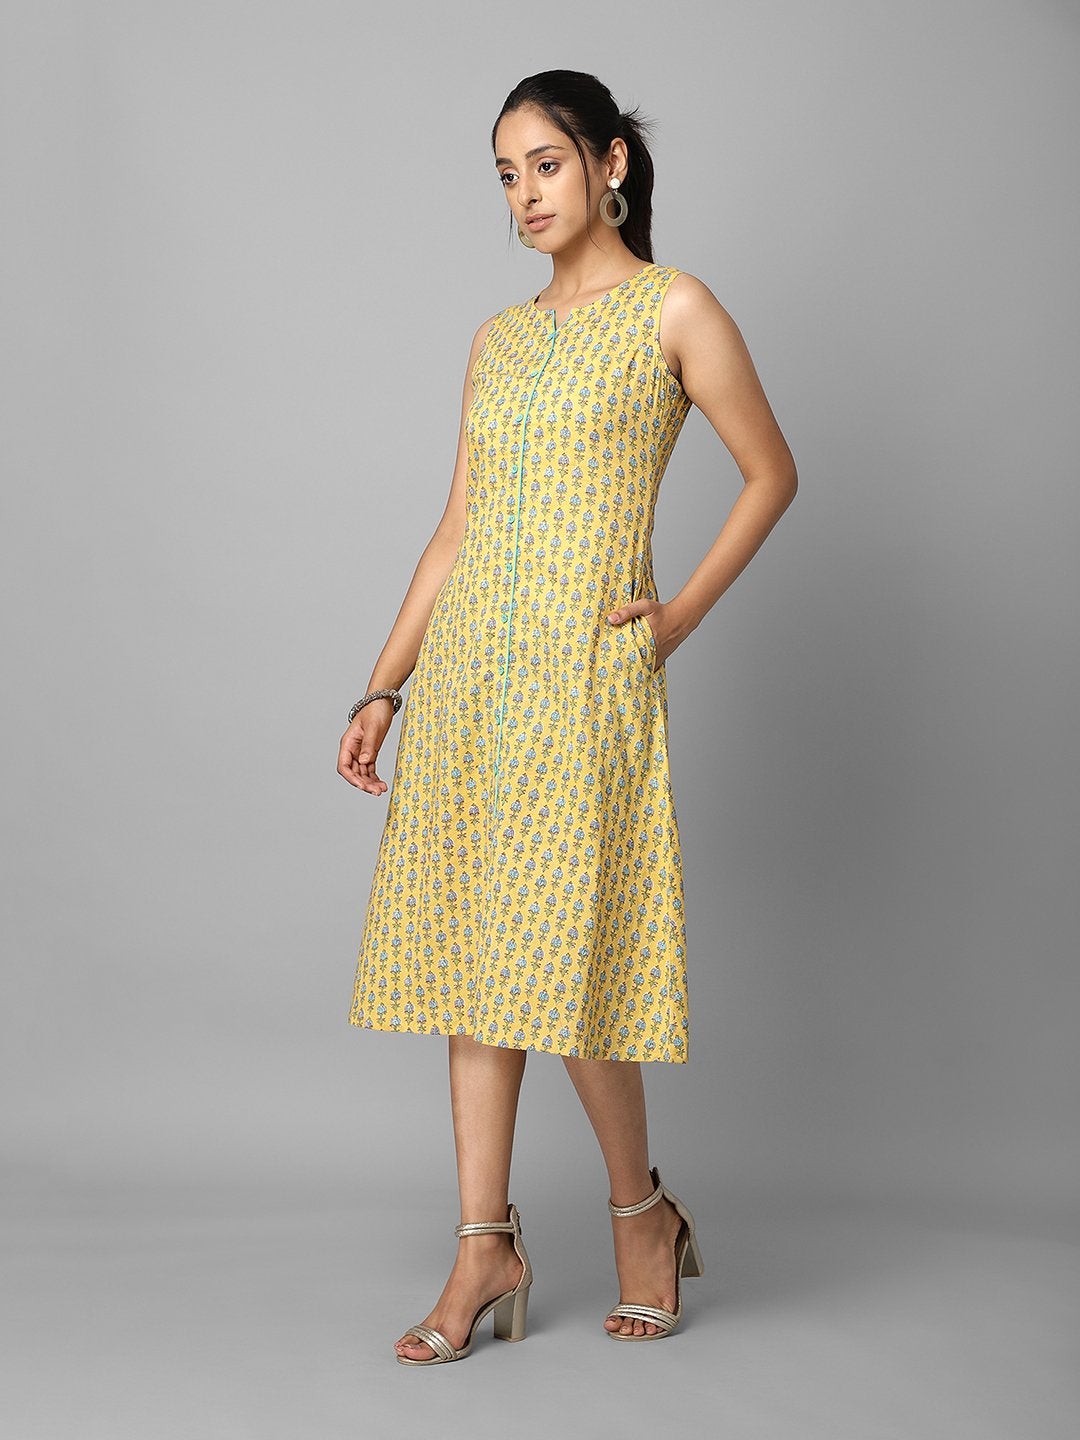 Women's Yellow Ethnic Printed Button Down A-Line Dress - Azira